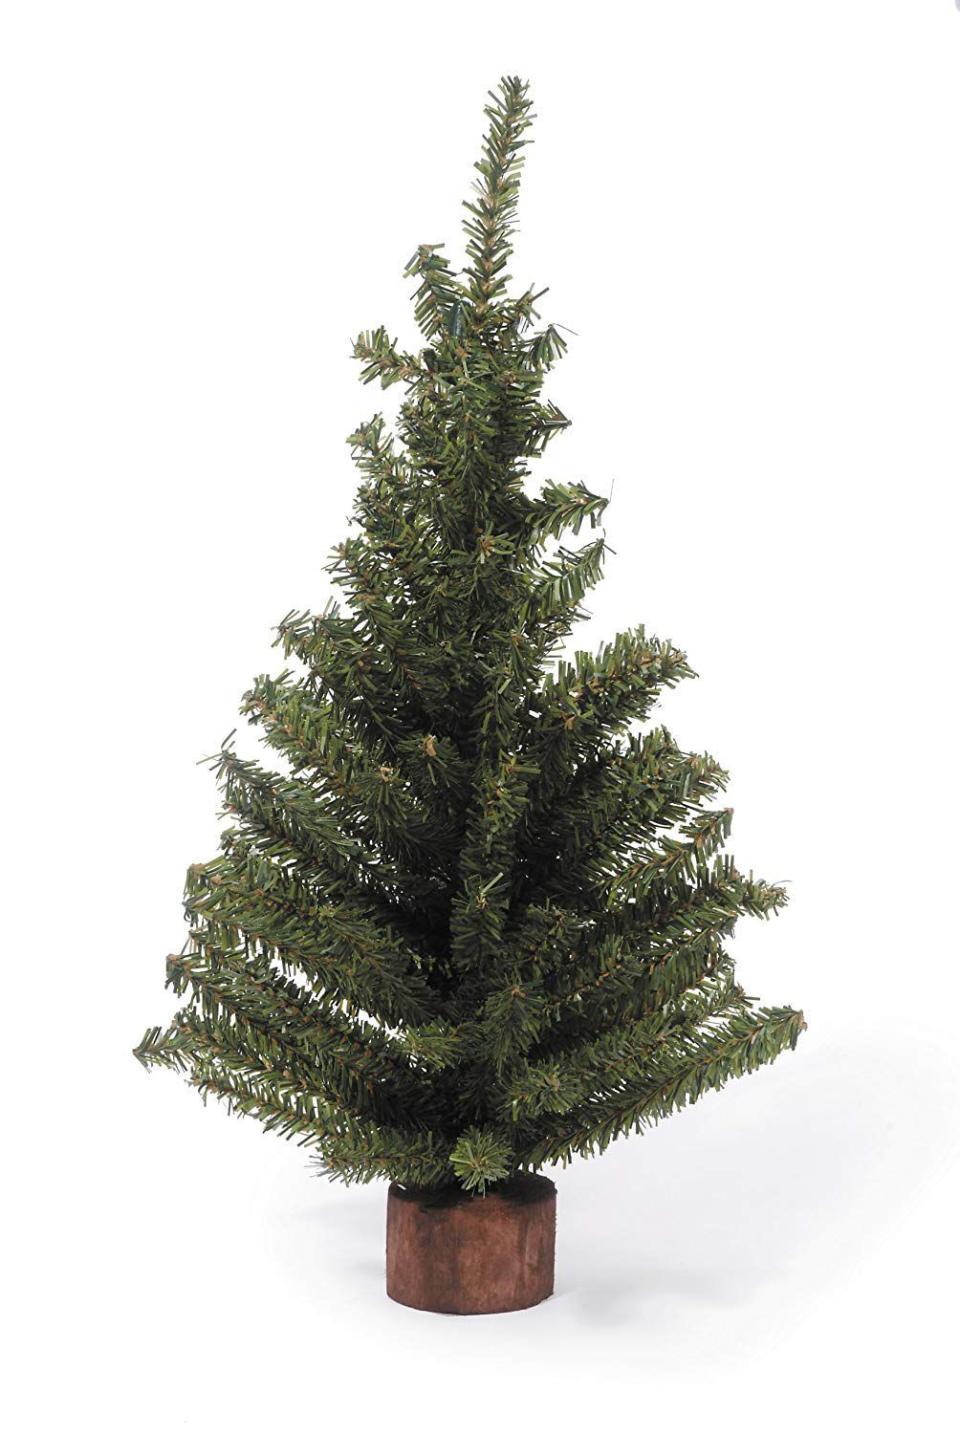 19) 18" Mini Canadian Pine Tree with Wood Base